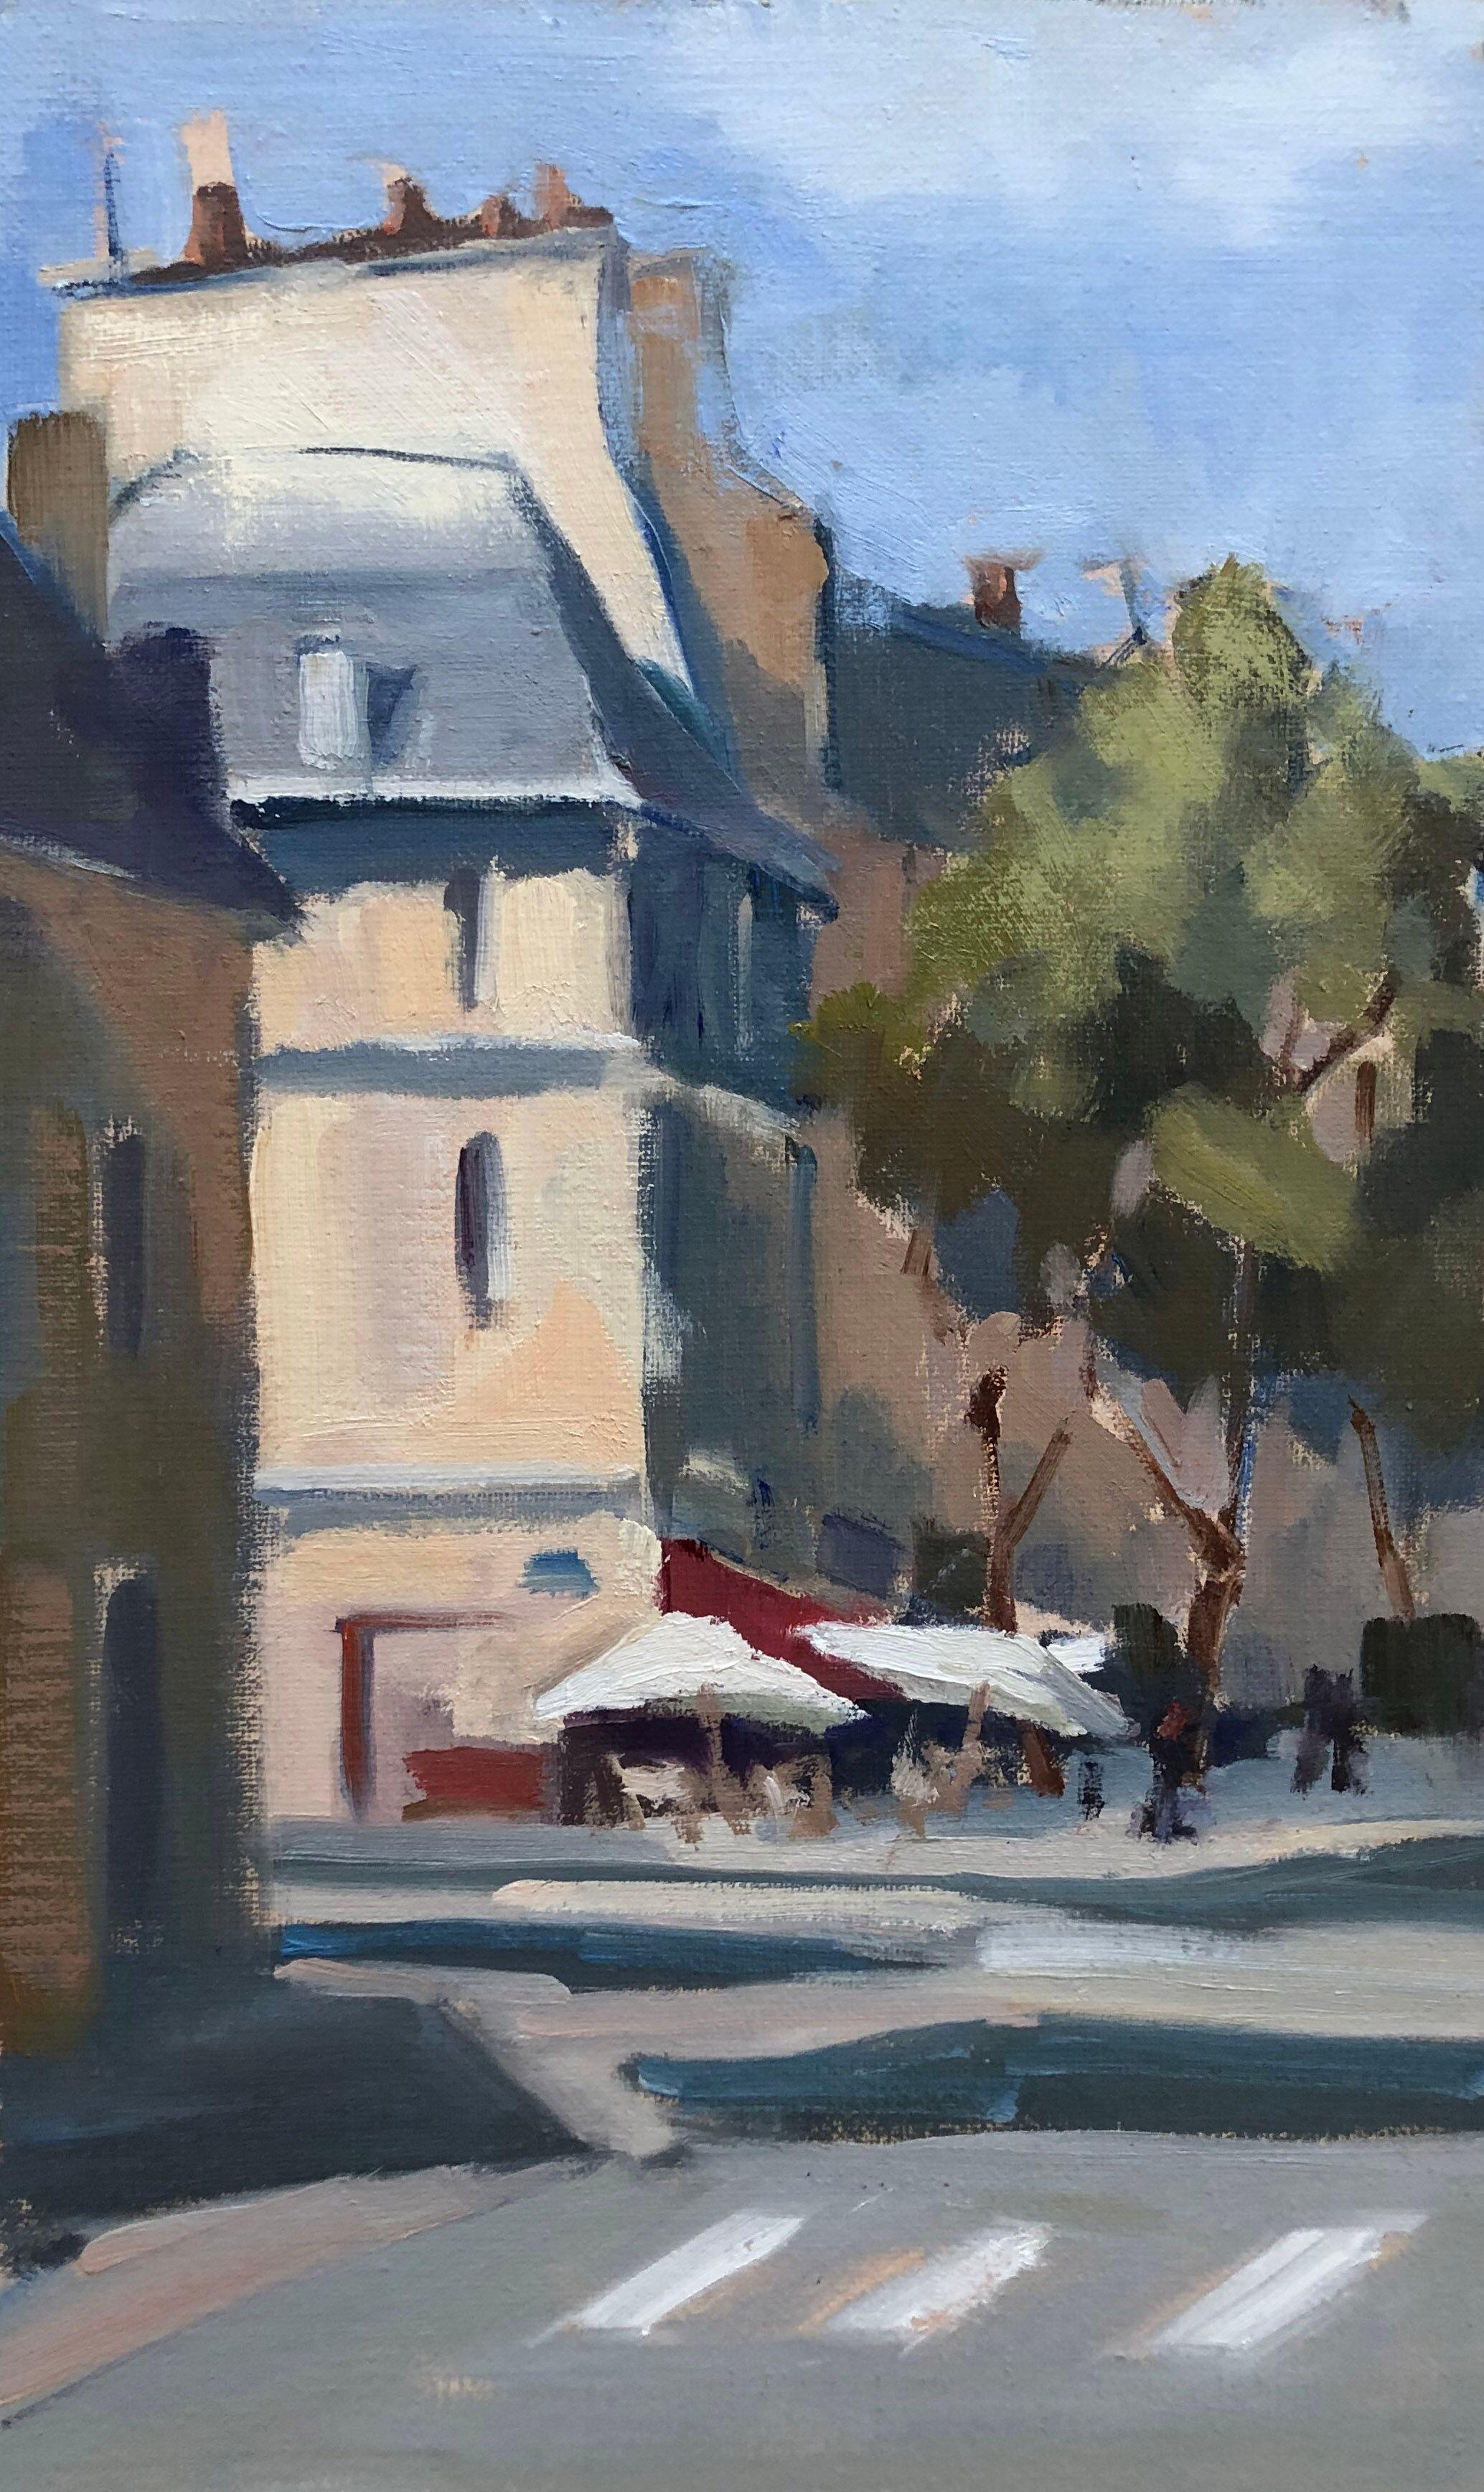 Lesley Powell Landscape Painting - 'Corner Cafe' Petite Vertical Post-Impressionist Parisian Painting